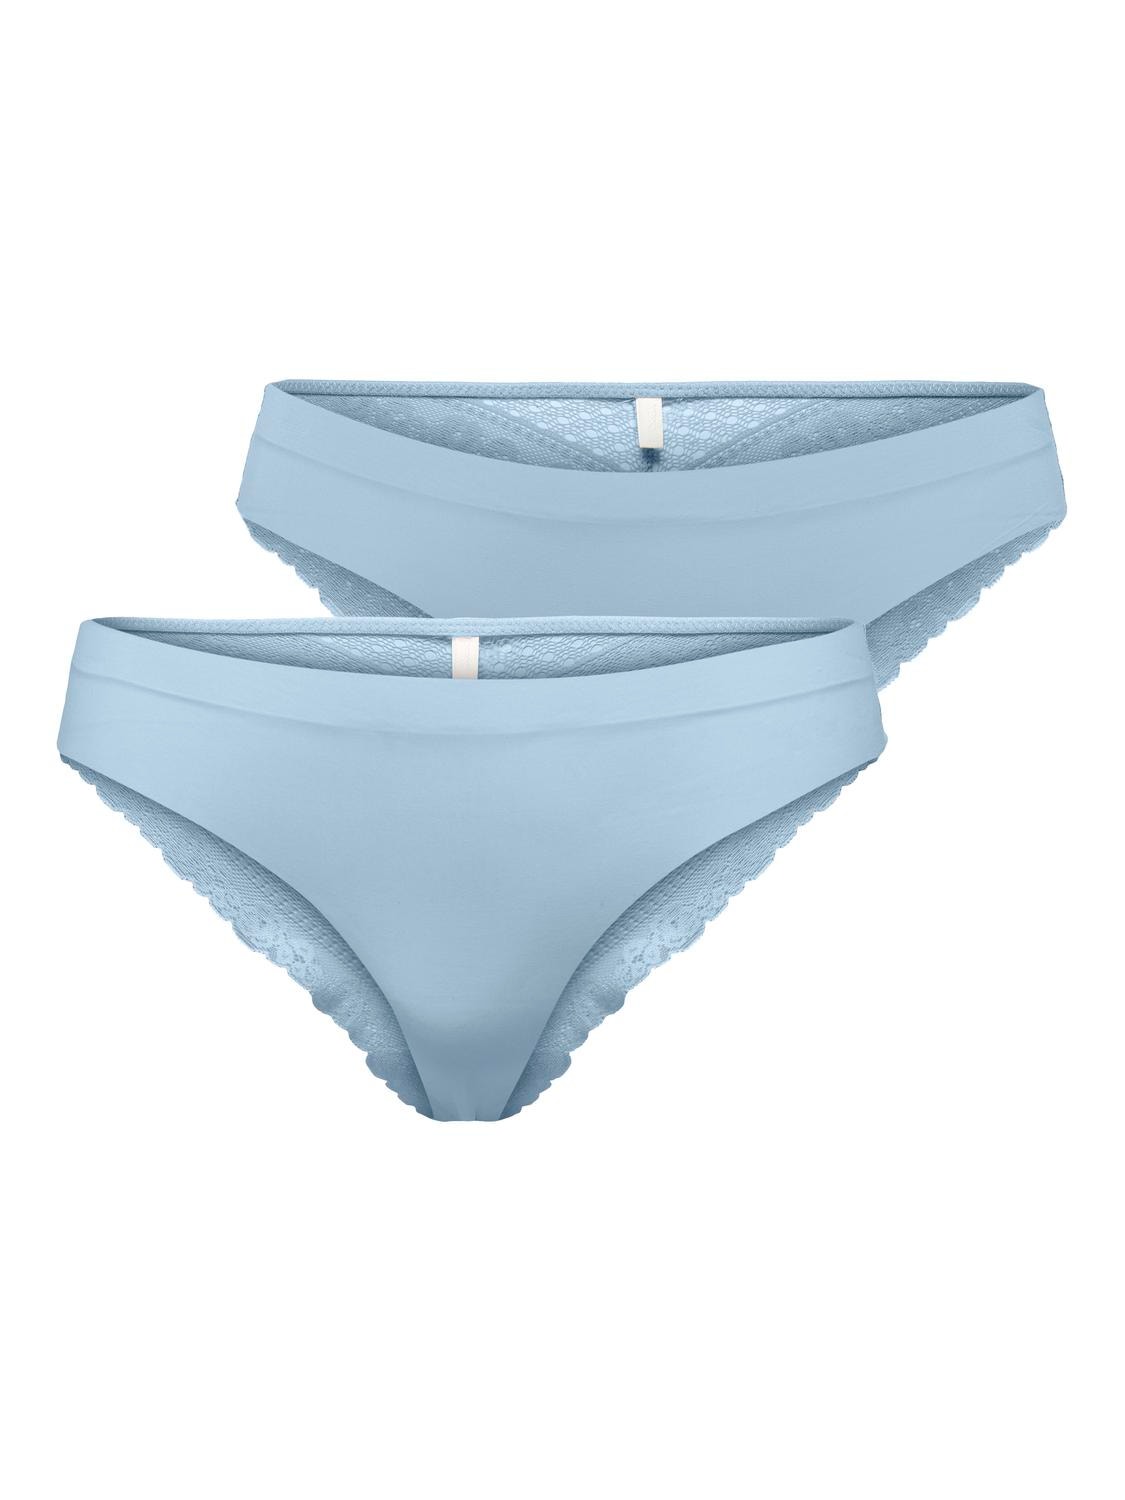 brazilian underwear - Buy brazilian underwear at Best Price in Malaysia